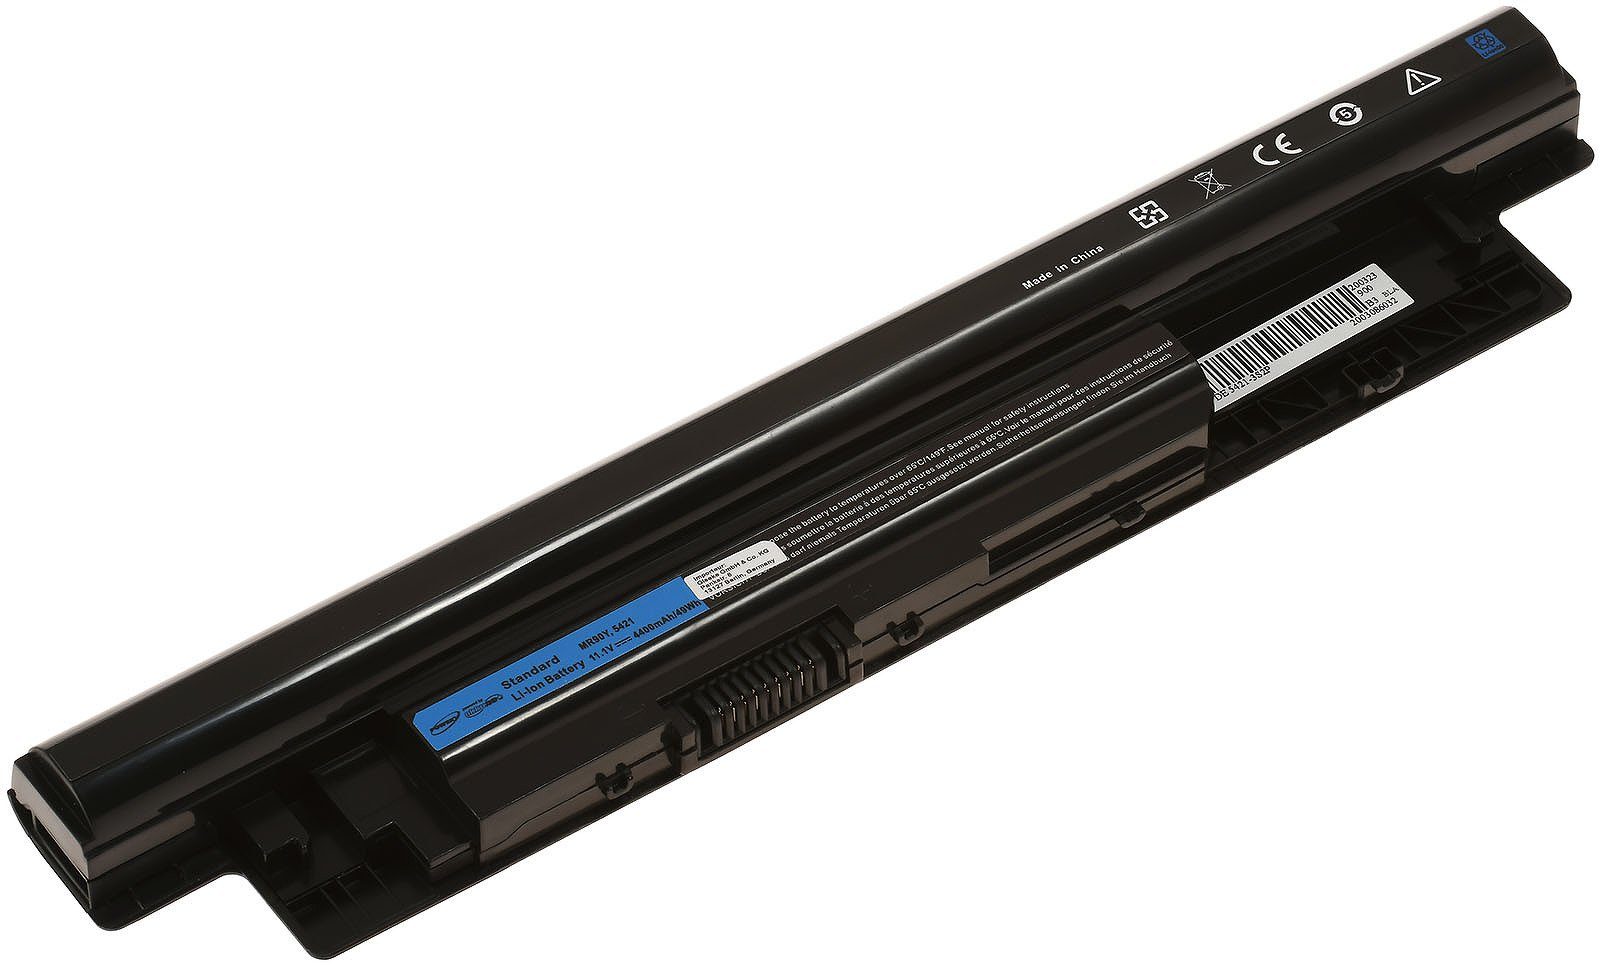 Standardakku kompatibel MR90Y Dell Typ V) (11.1 Powery mAh mit Laptop-Akku 4400